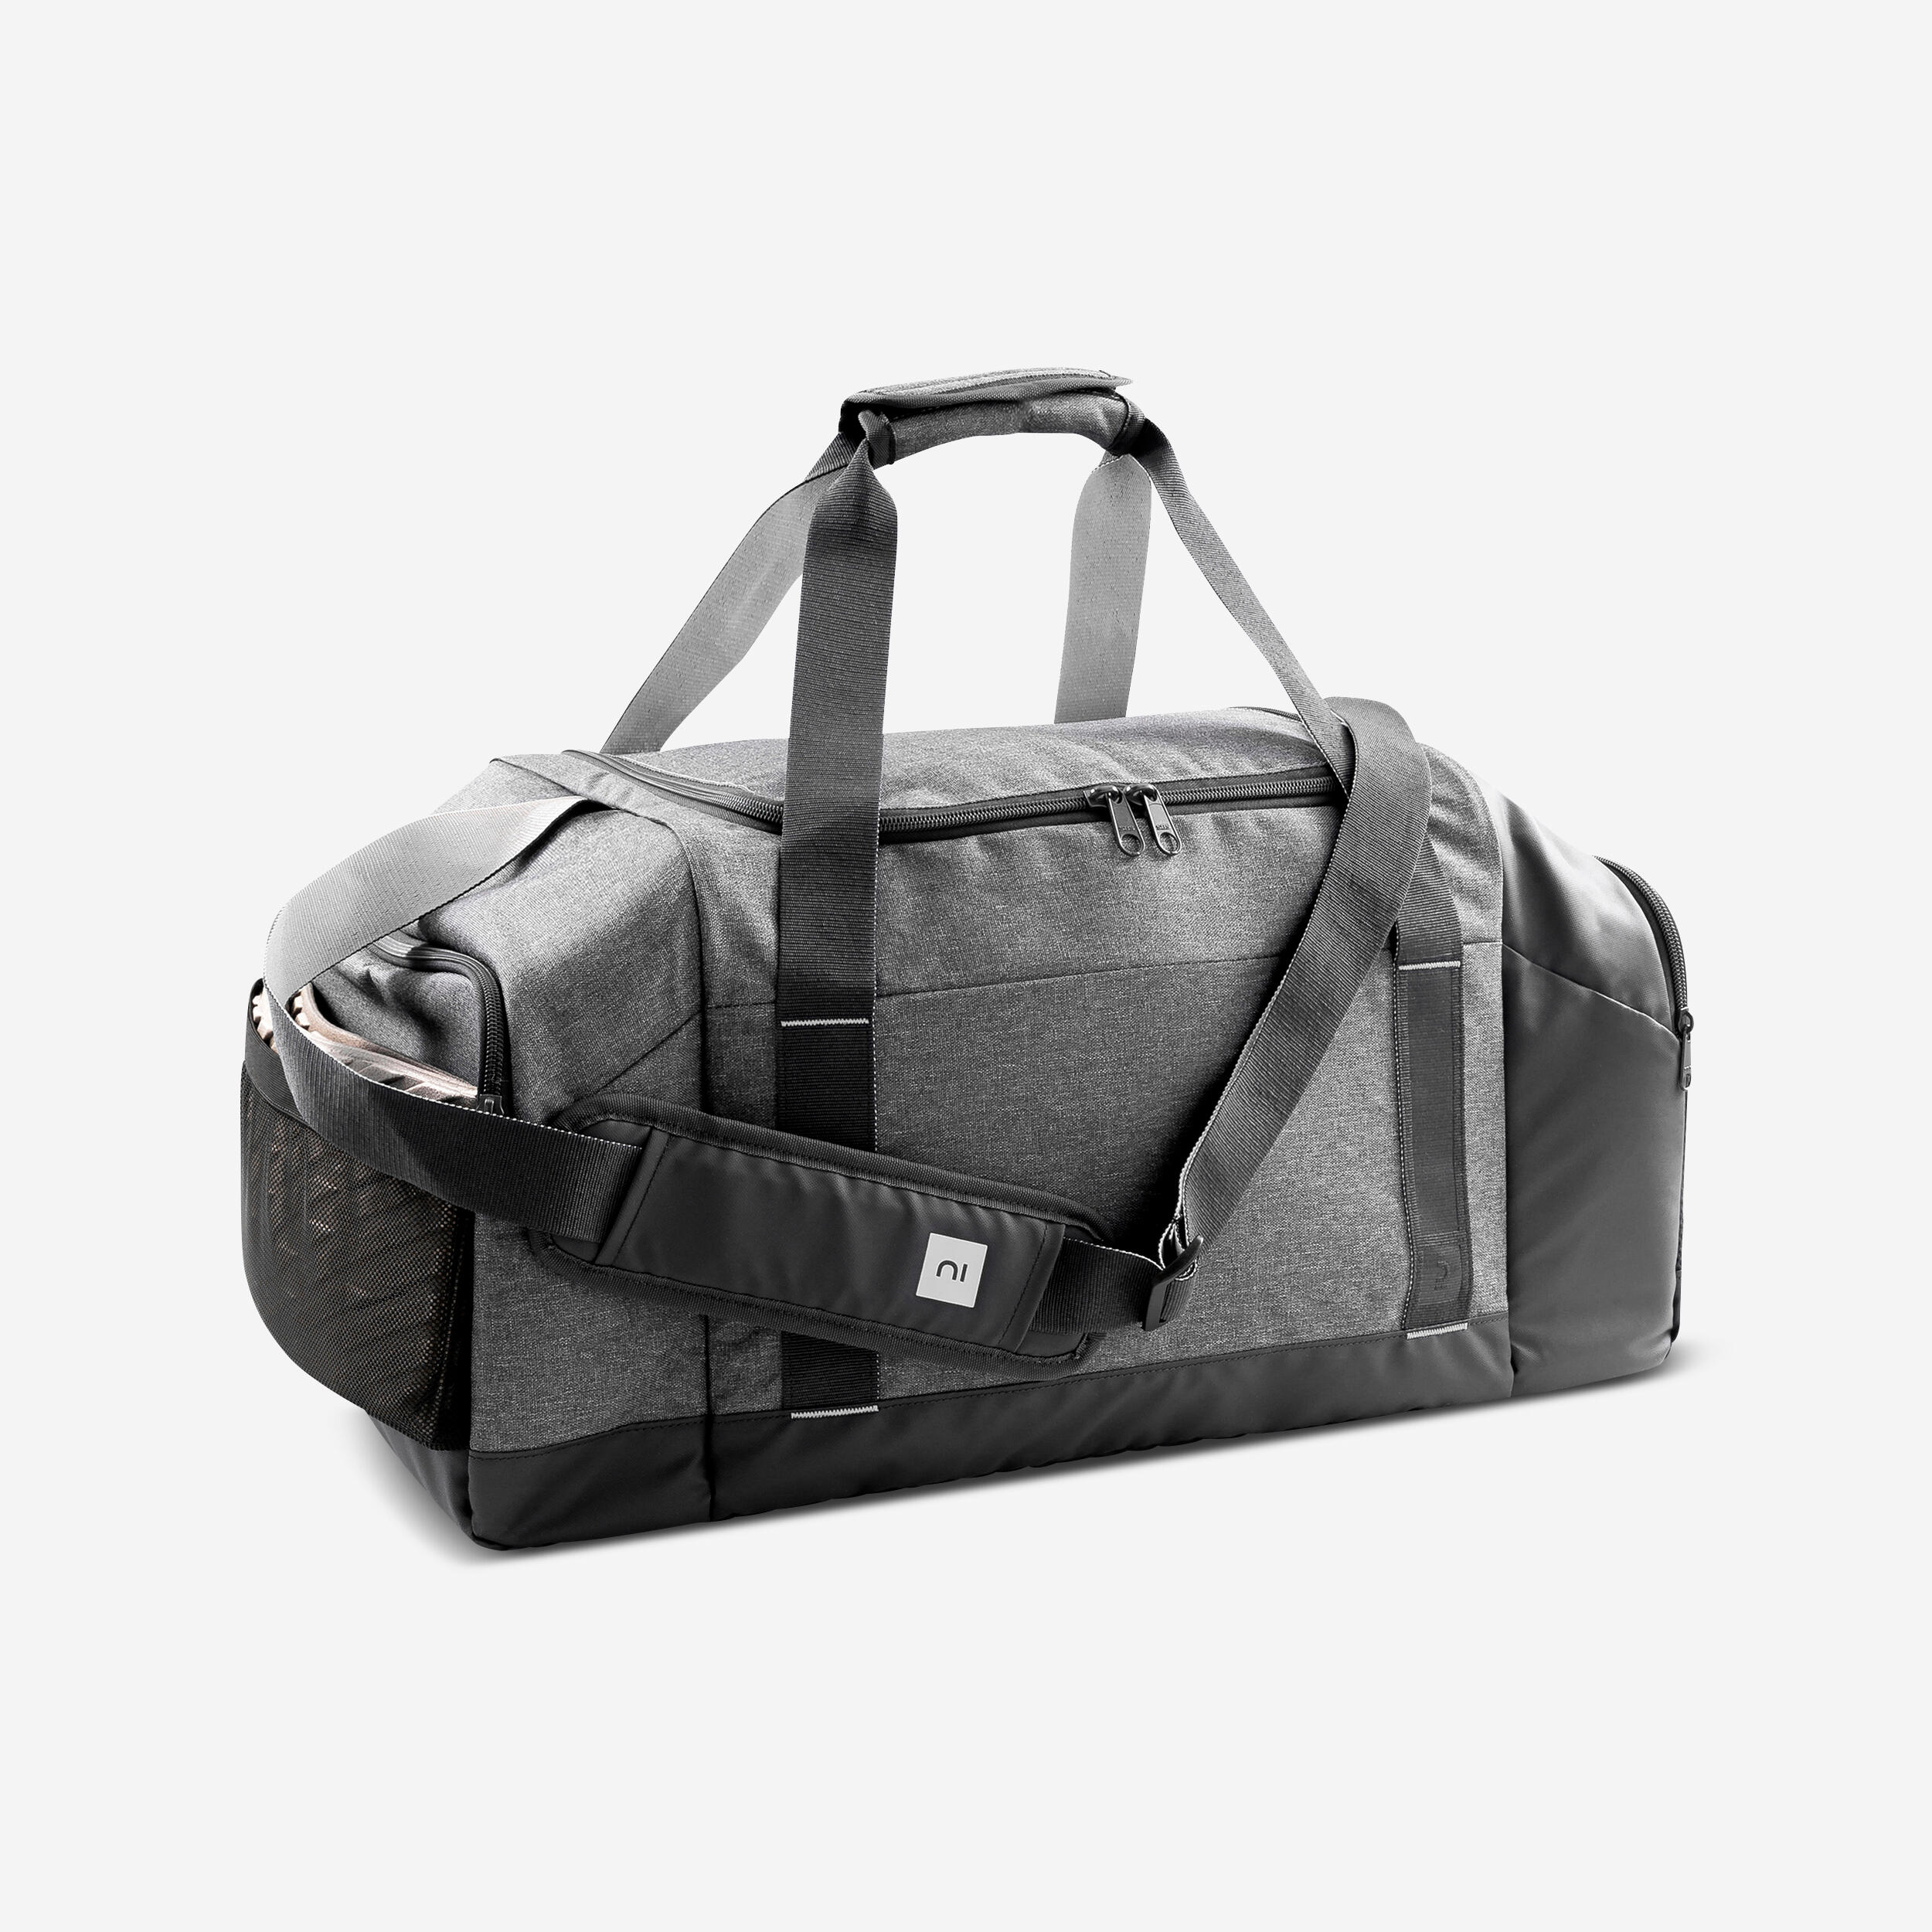 55L Sports Bag Academic - Black/Grey 1/9